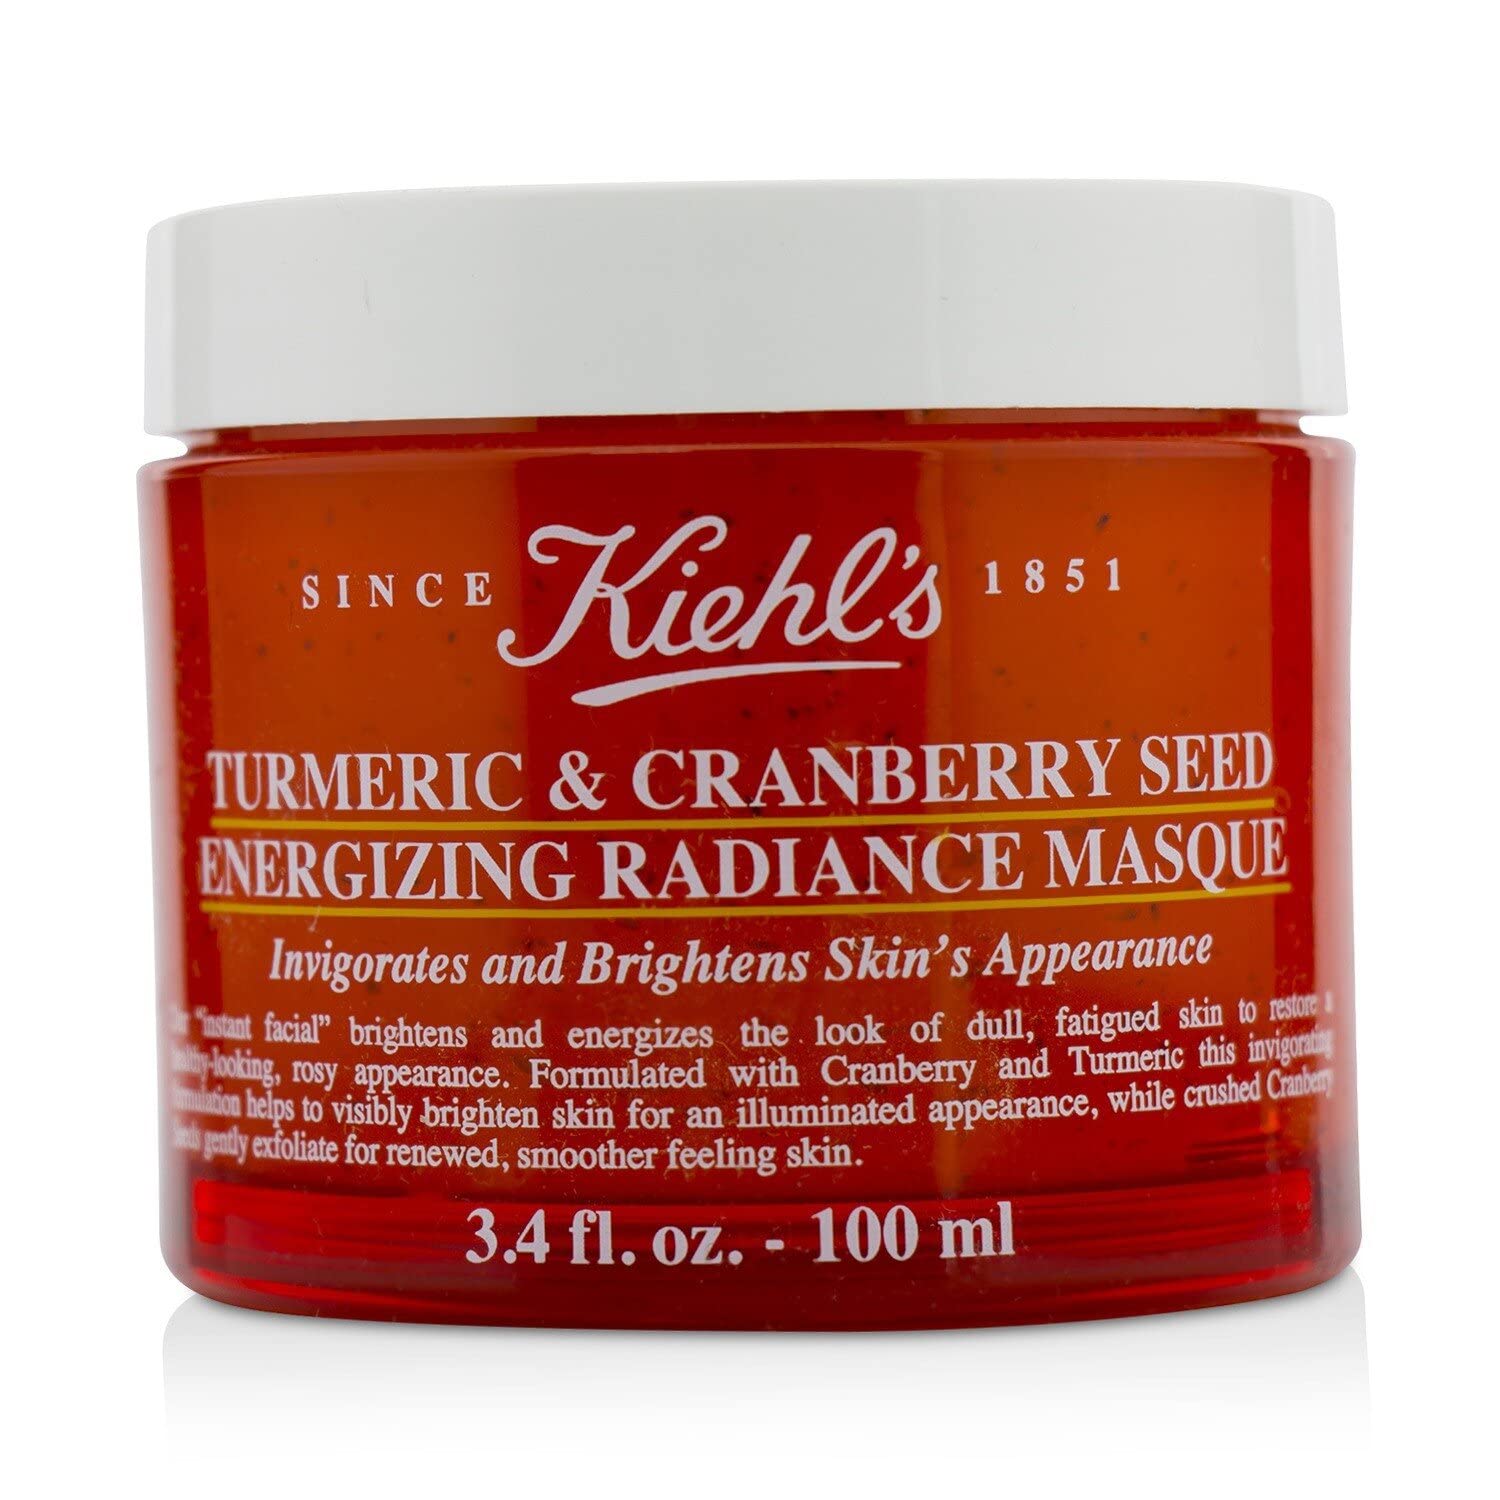 Kiehl's Turmeric & Cranberry Seed Energizing Radiance Mask: